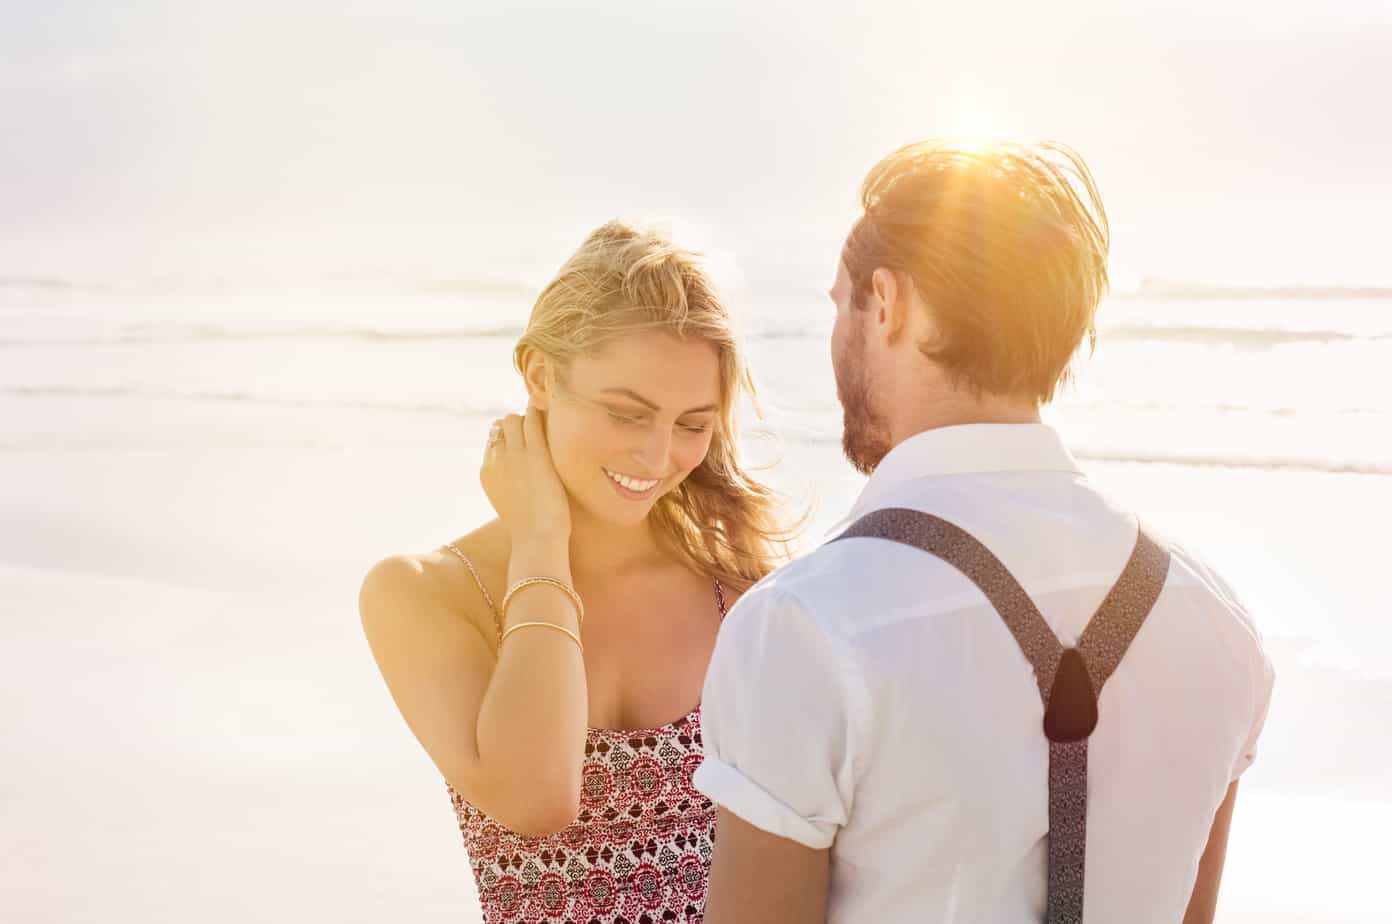 A man standing next to a woman on a beach